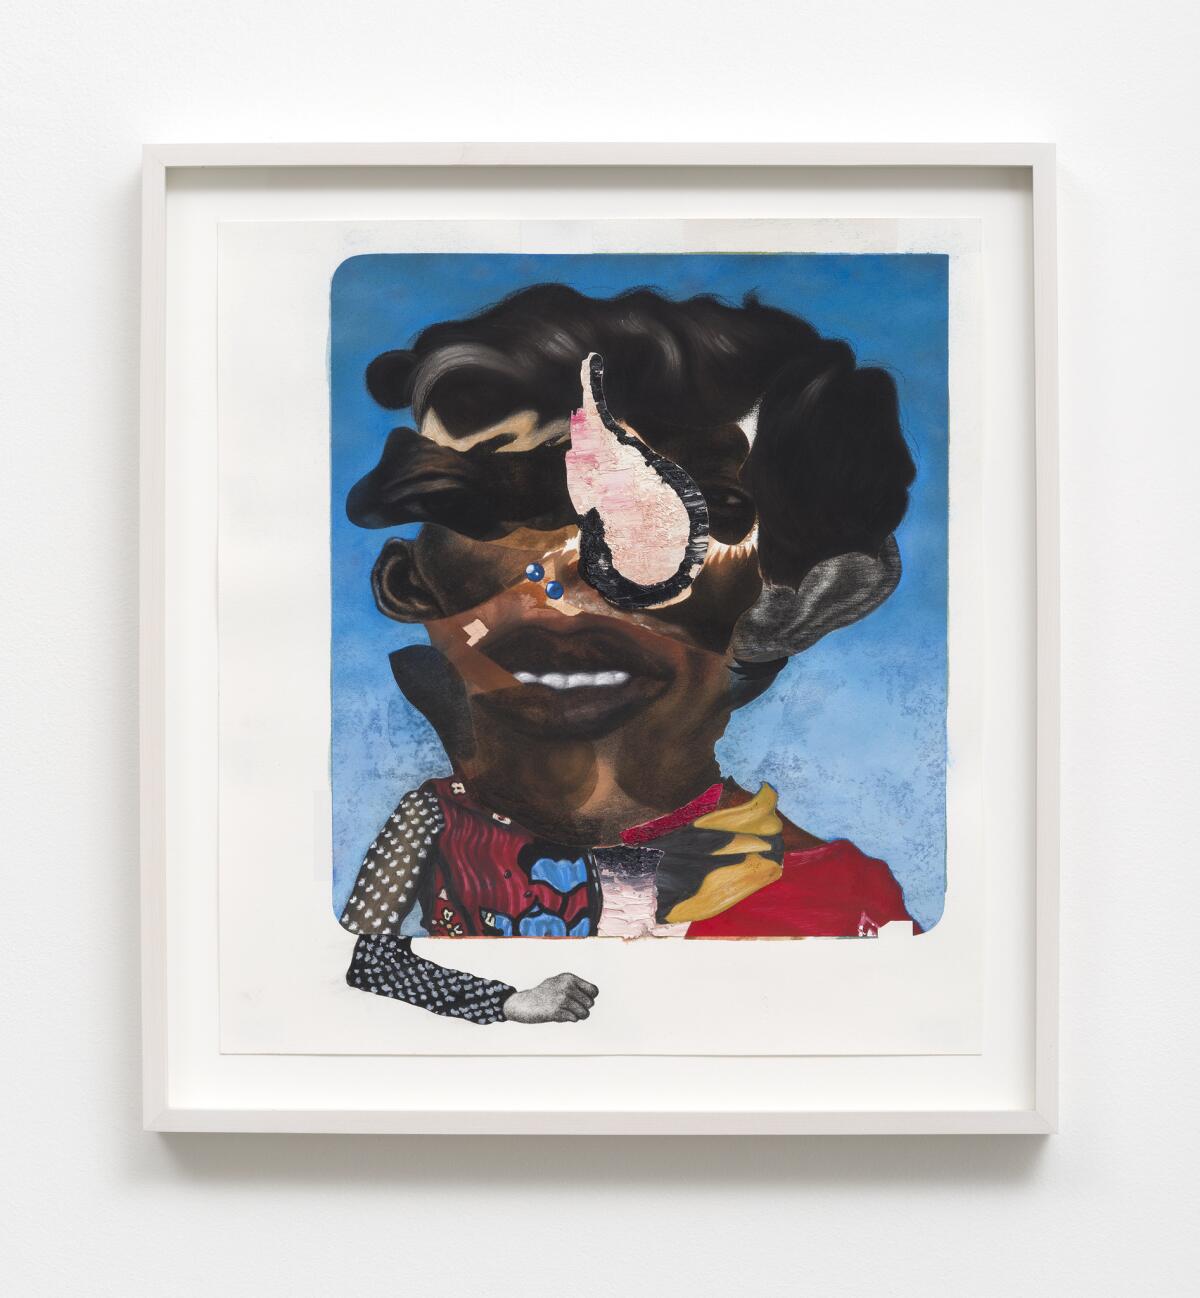 Nathaniel Mary Quinn's "Super-Fly,” 2015. (Nathaniel Mary Quinn / M+B Gallery)